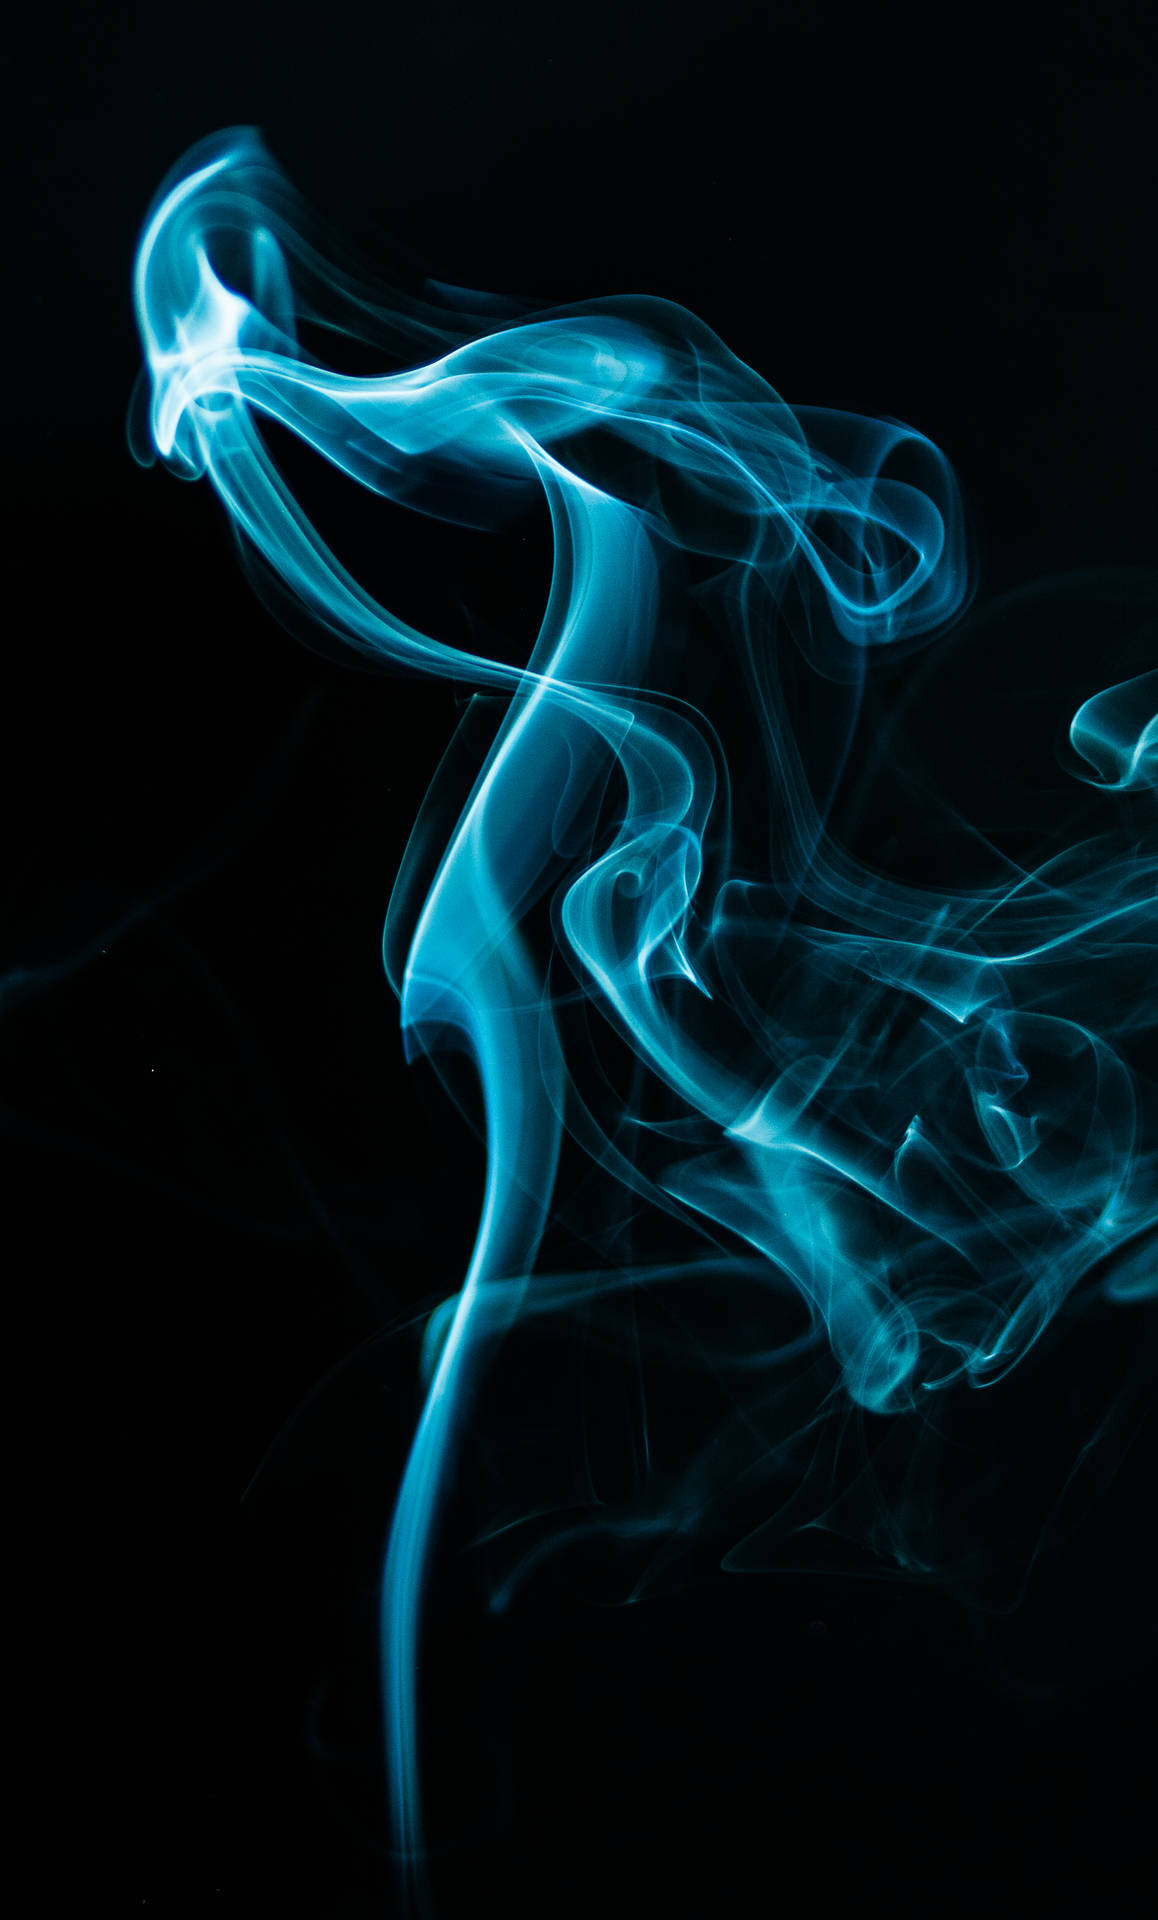 Smoke 2215X3673 Wallpaper and Background Image